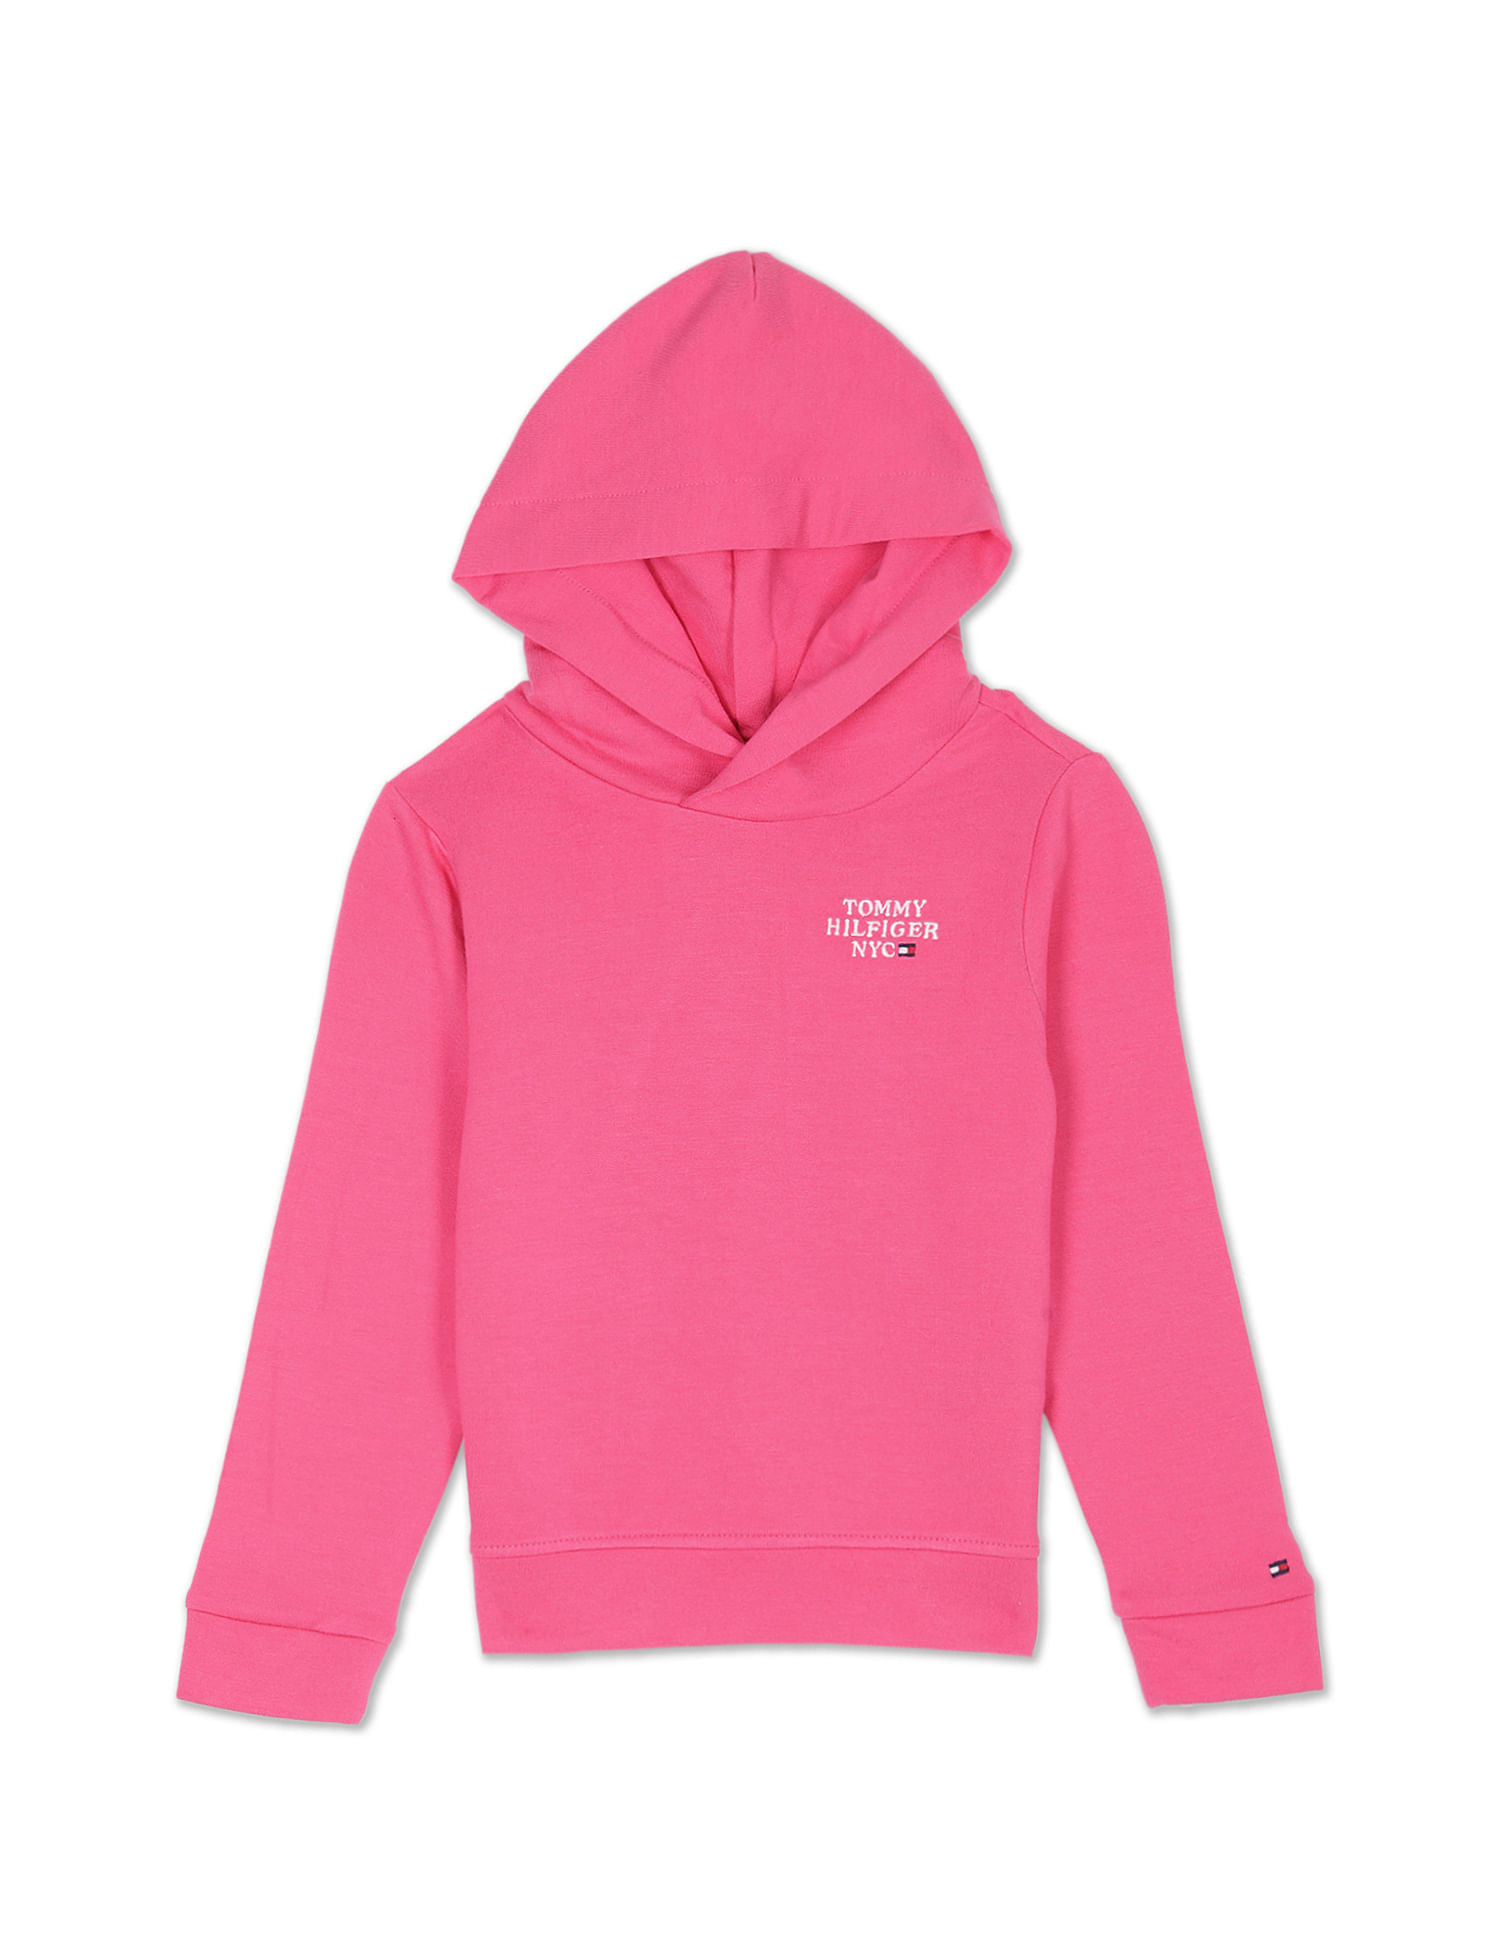 Pink Solid Embroidered Tommy Logo Girls Hilfiger Sweatshirt Hooded Kids Buy